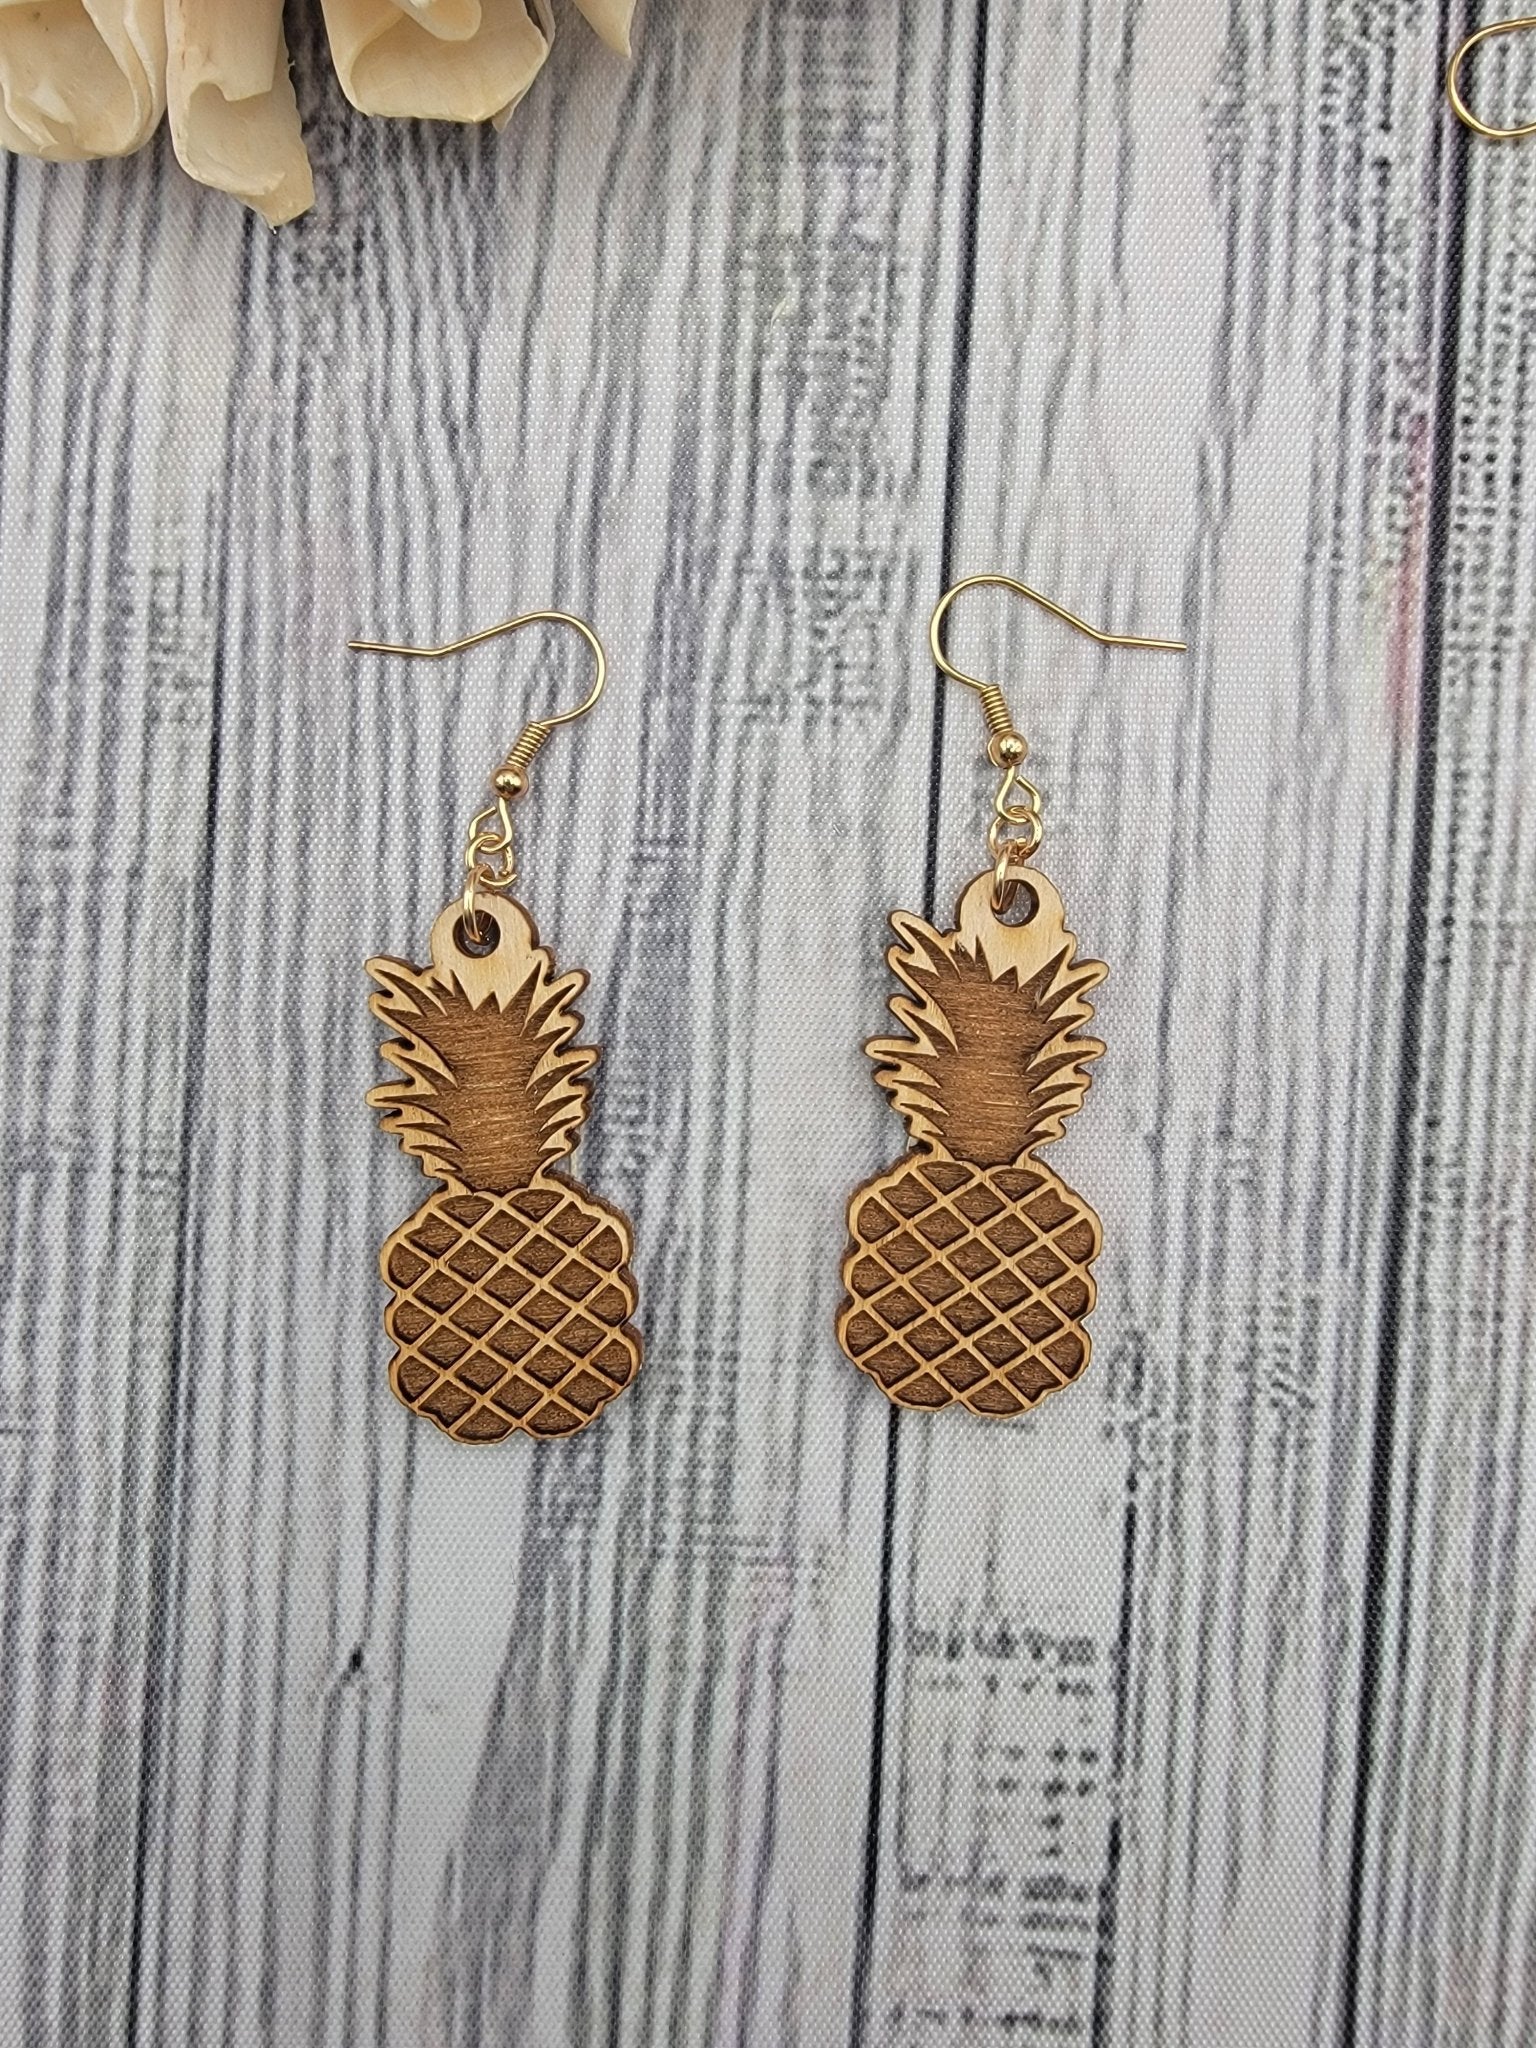 Hawaiian Hula Girl / Pineapple Earrings - EverLee Creations